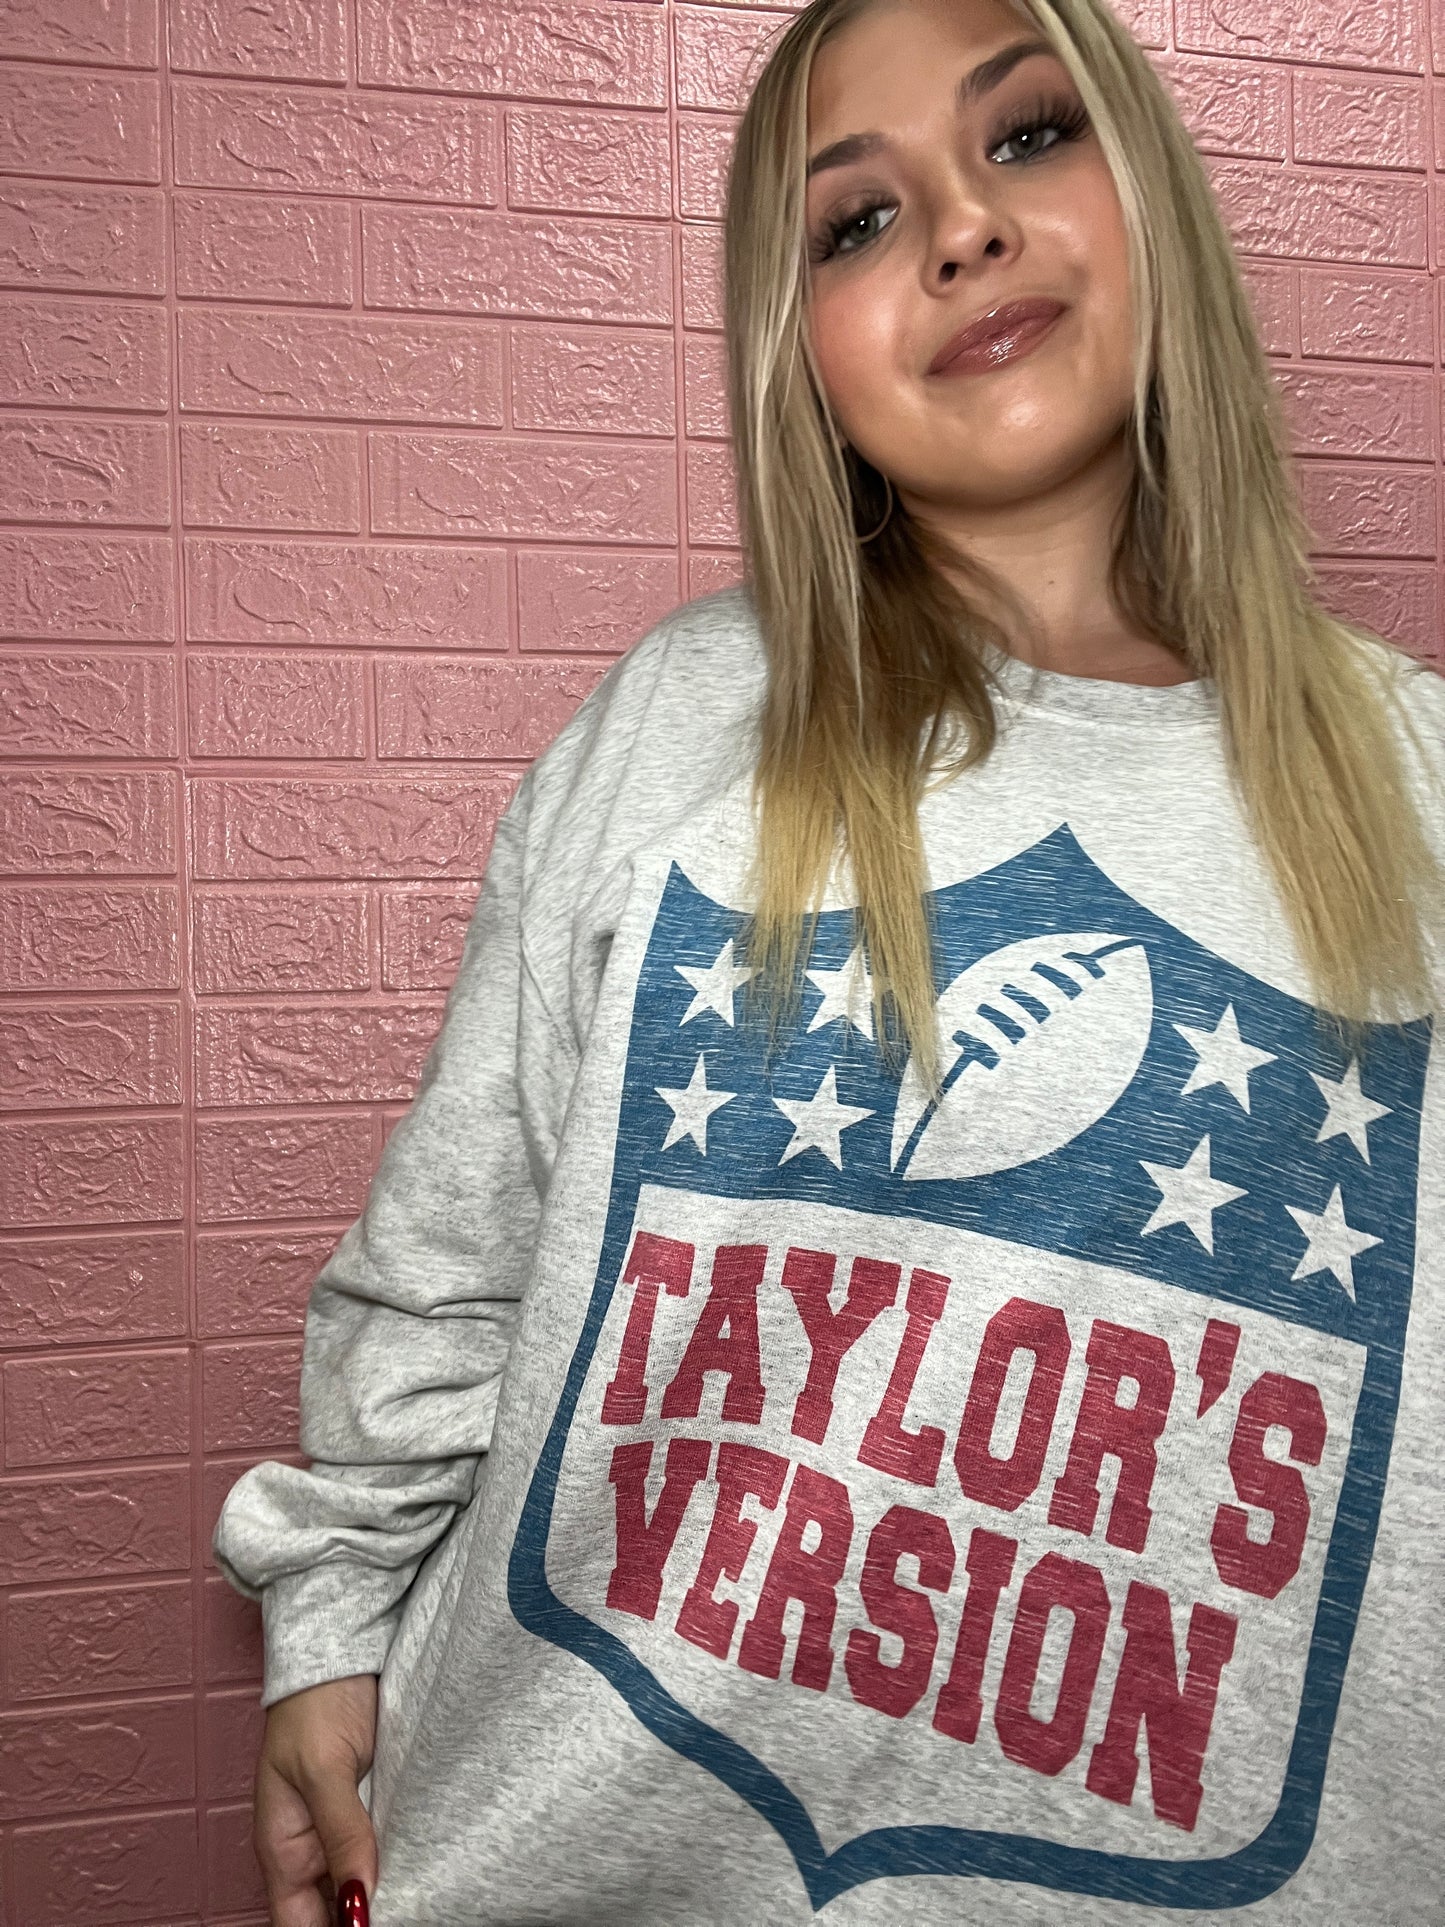 Taylors Version NFL Sweatshirt